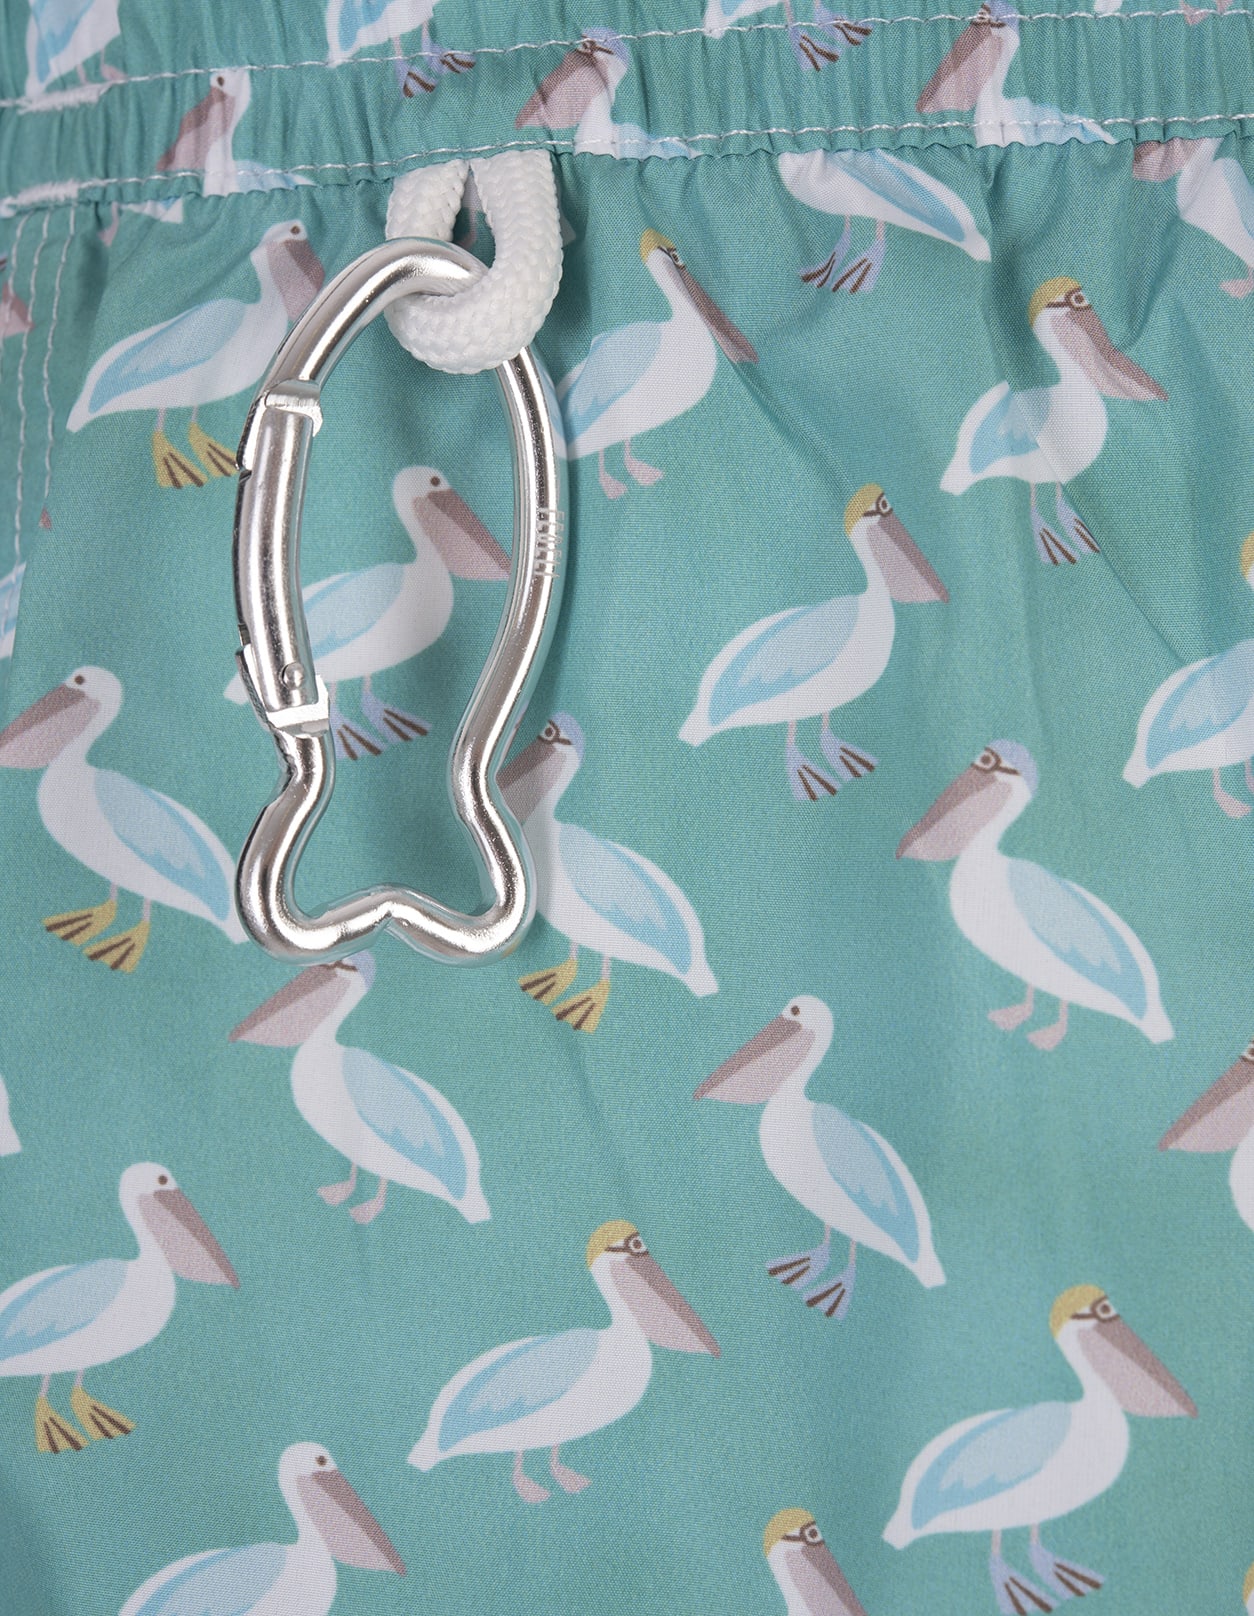 Shop Fedeli Green Pink Swim Shorts With Pelican Pattern